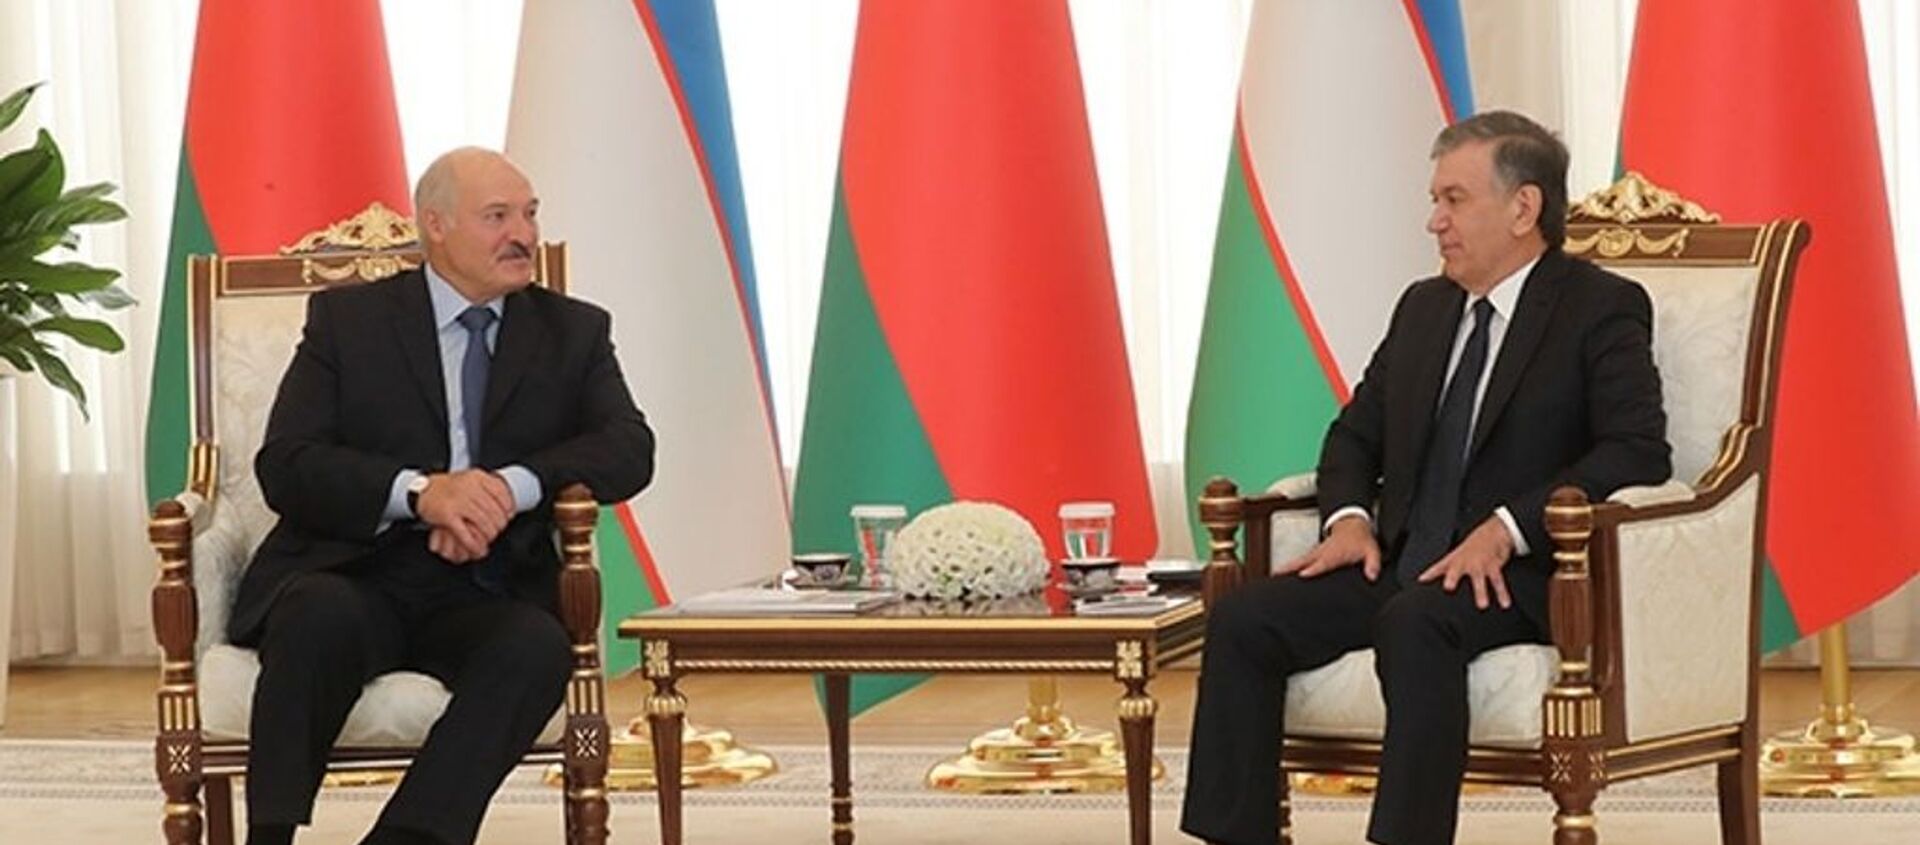 Vstrecha prezidenta Uzbekistana s prezidentom Belarusi v rezidensii Kuksaroy - Sputnik O‘zbekiston, 1920, 13.09.2018